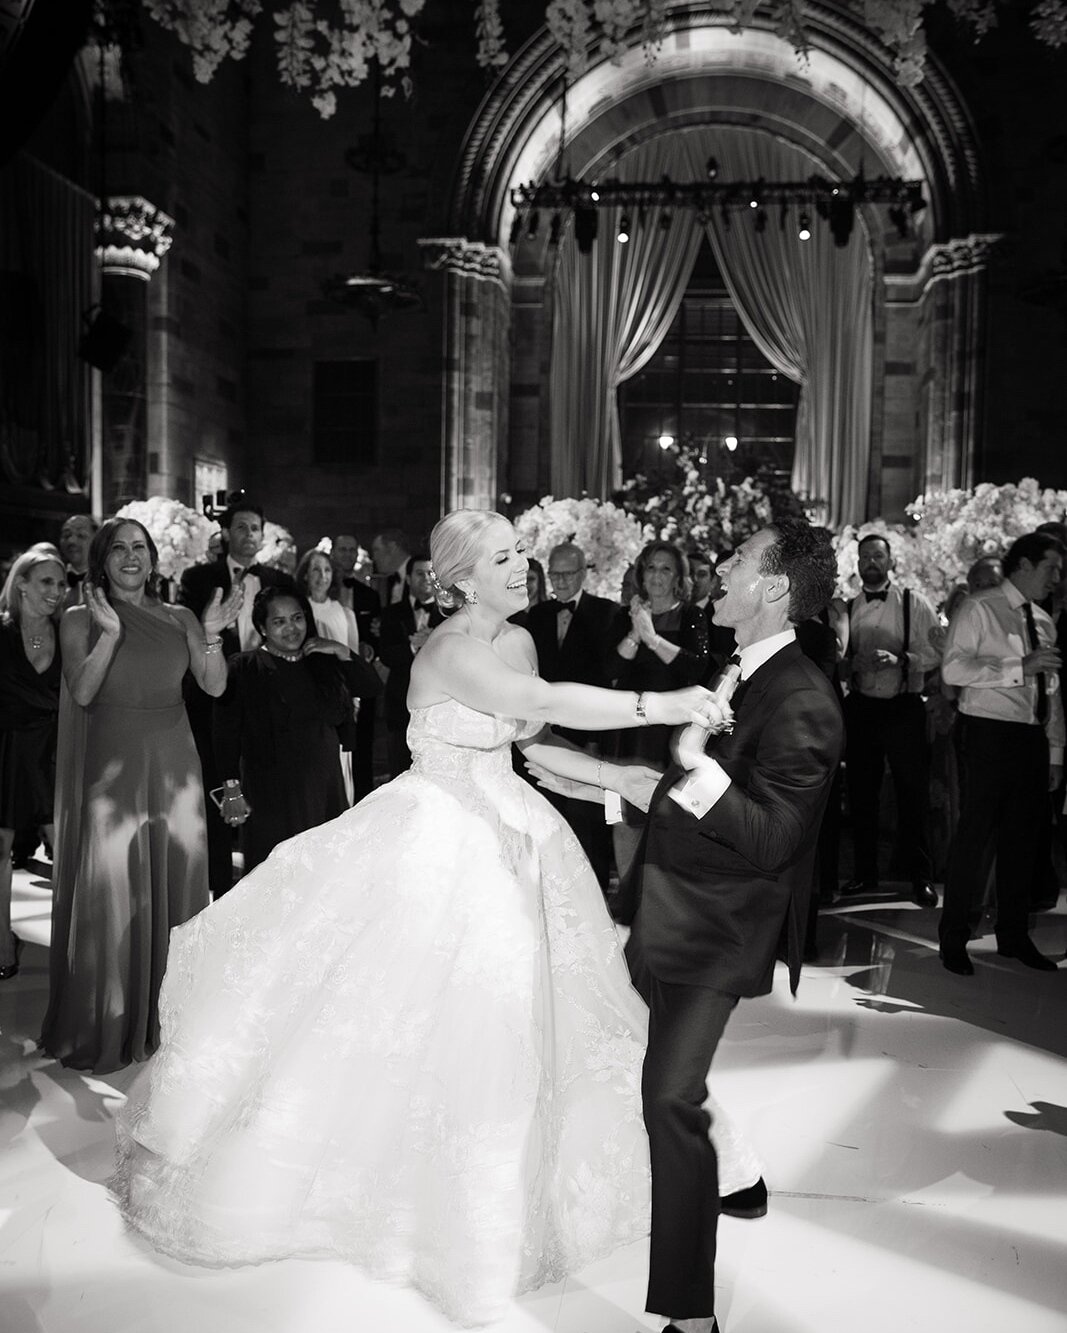 Our best wedding tip yet&hellip; have a blast and dance the night away! #bigapplebride #bigapplebrideevents

Photographer: @nathansmithstudios